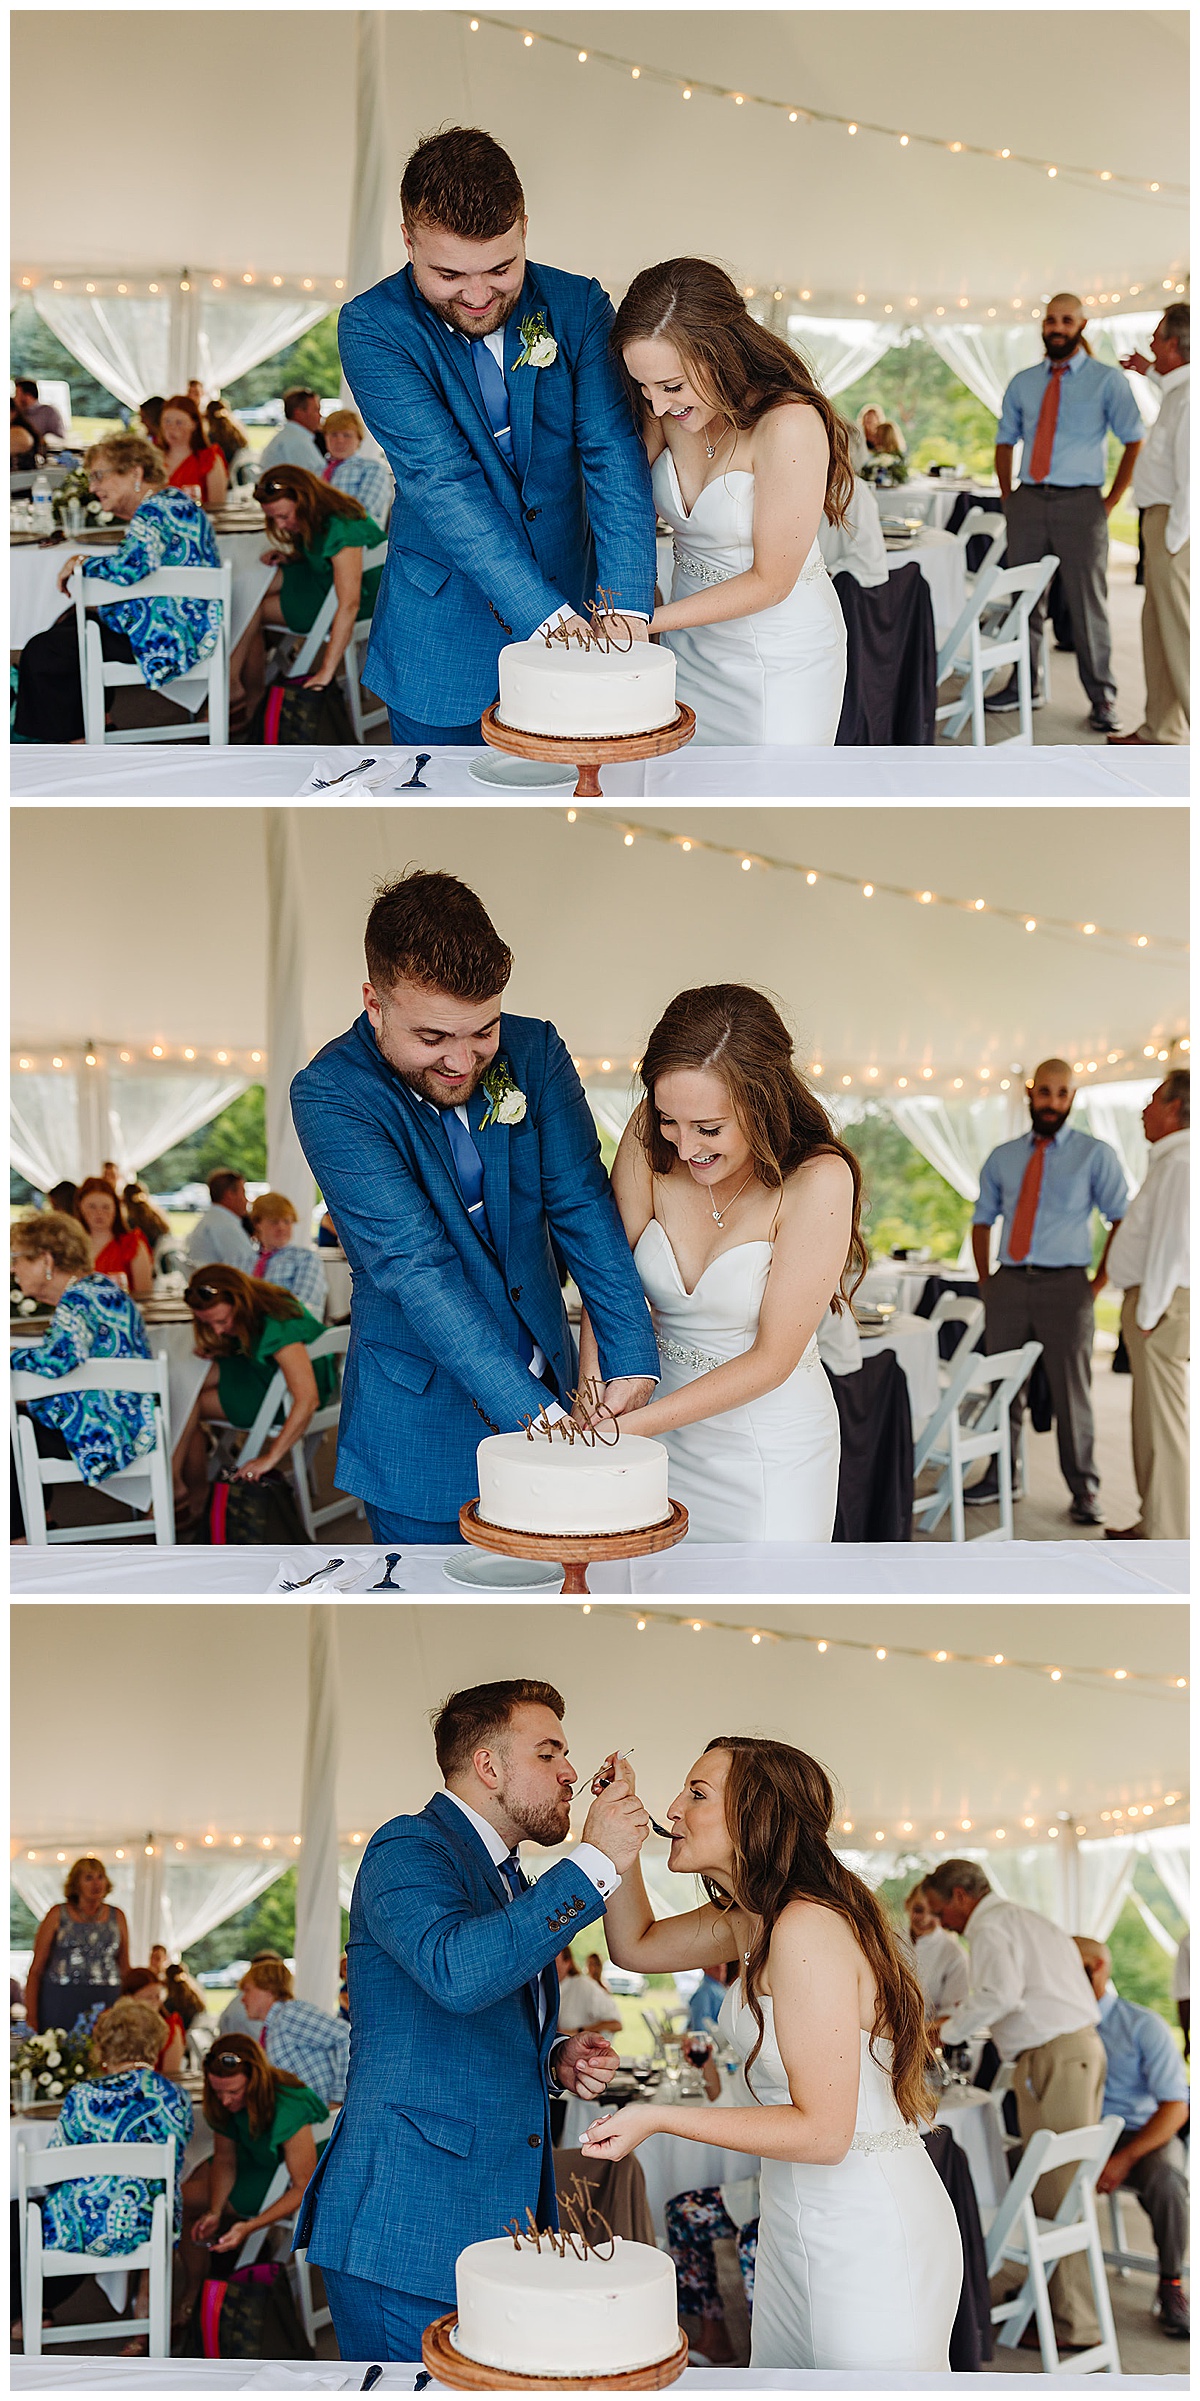 Couple cuts and enjoys the wedding cake for Kayla Bouren Photography